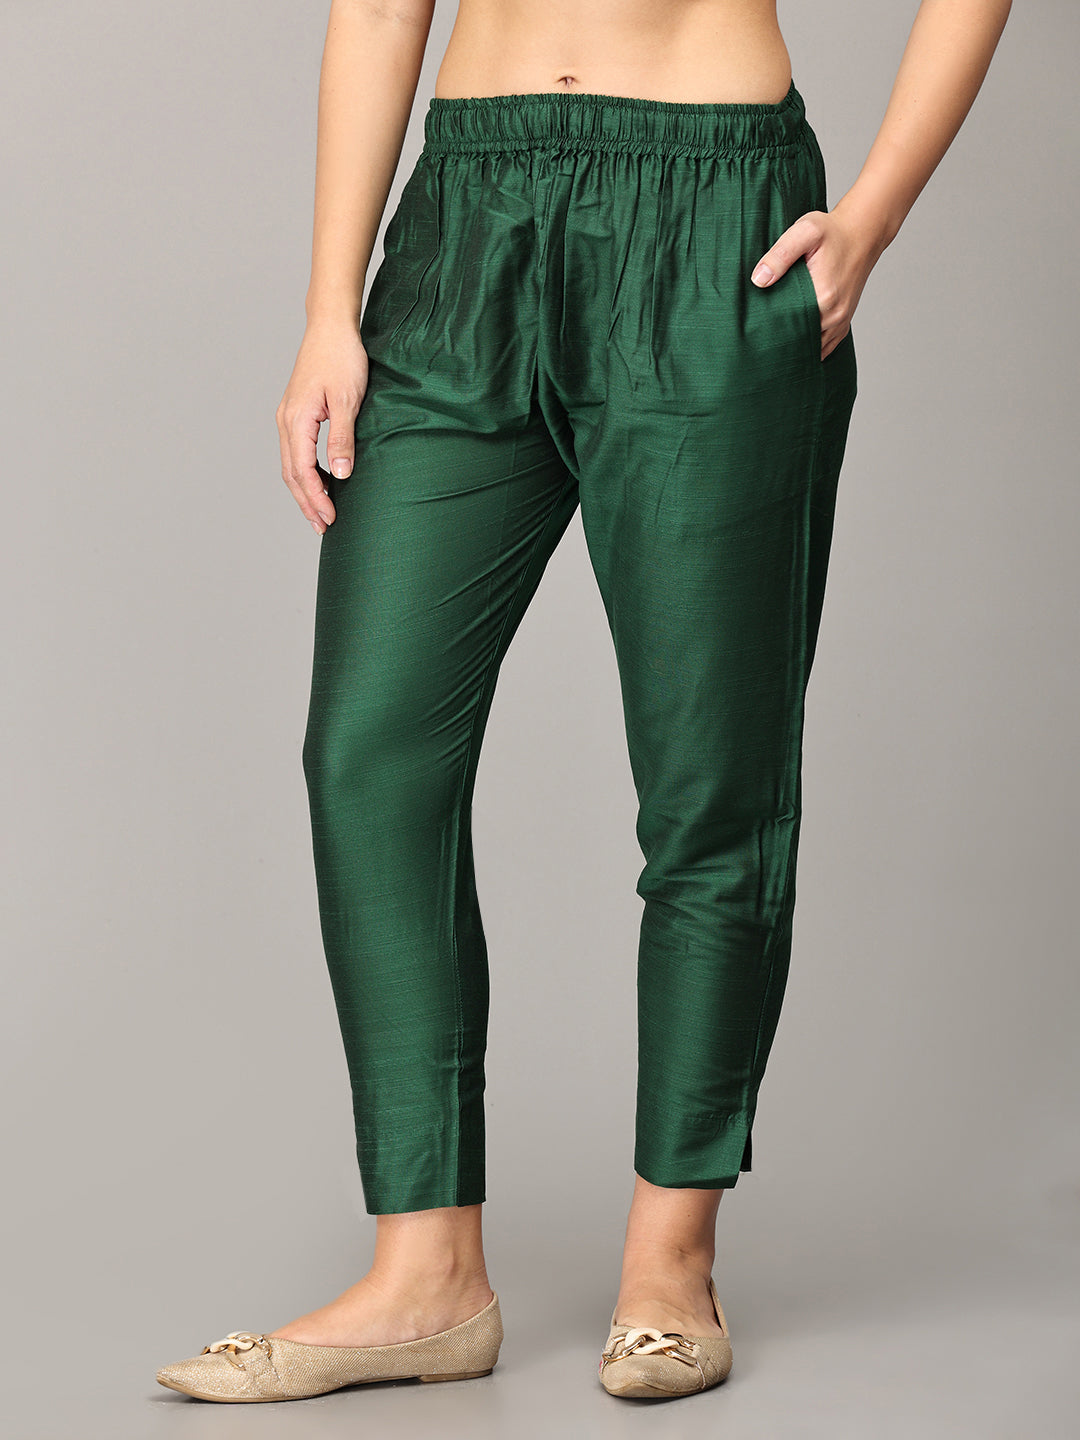 Sojanya (Since 1958) Men's Cotton Blend Bottle Green Solid Formal Trousers